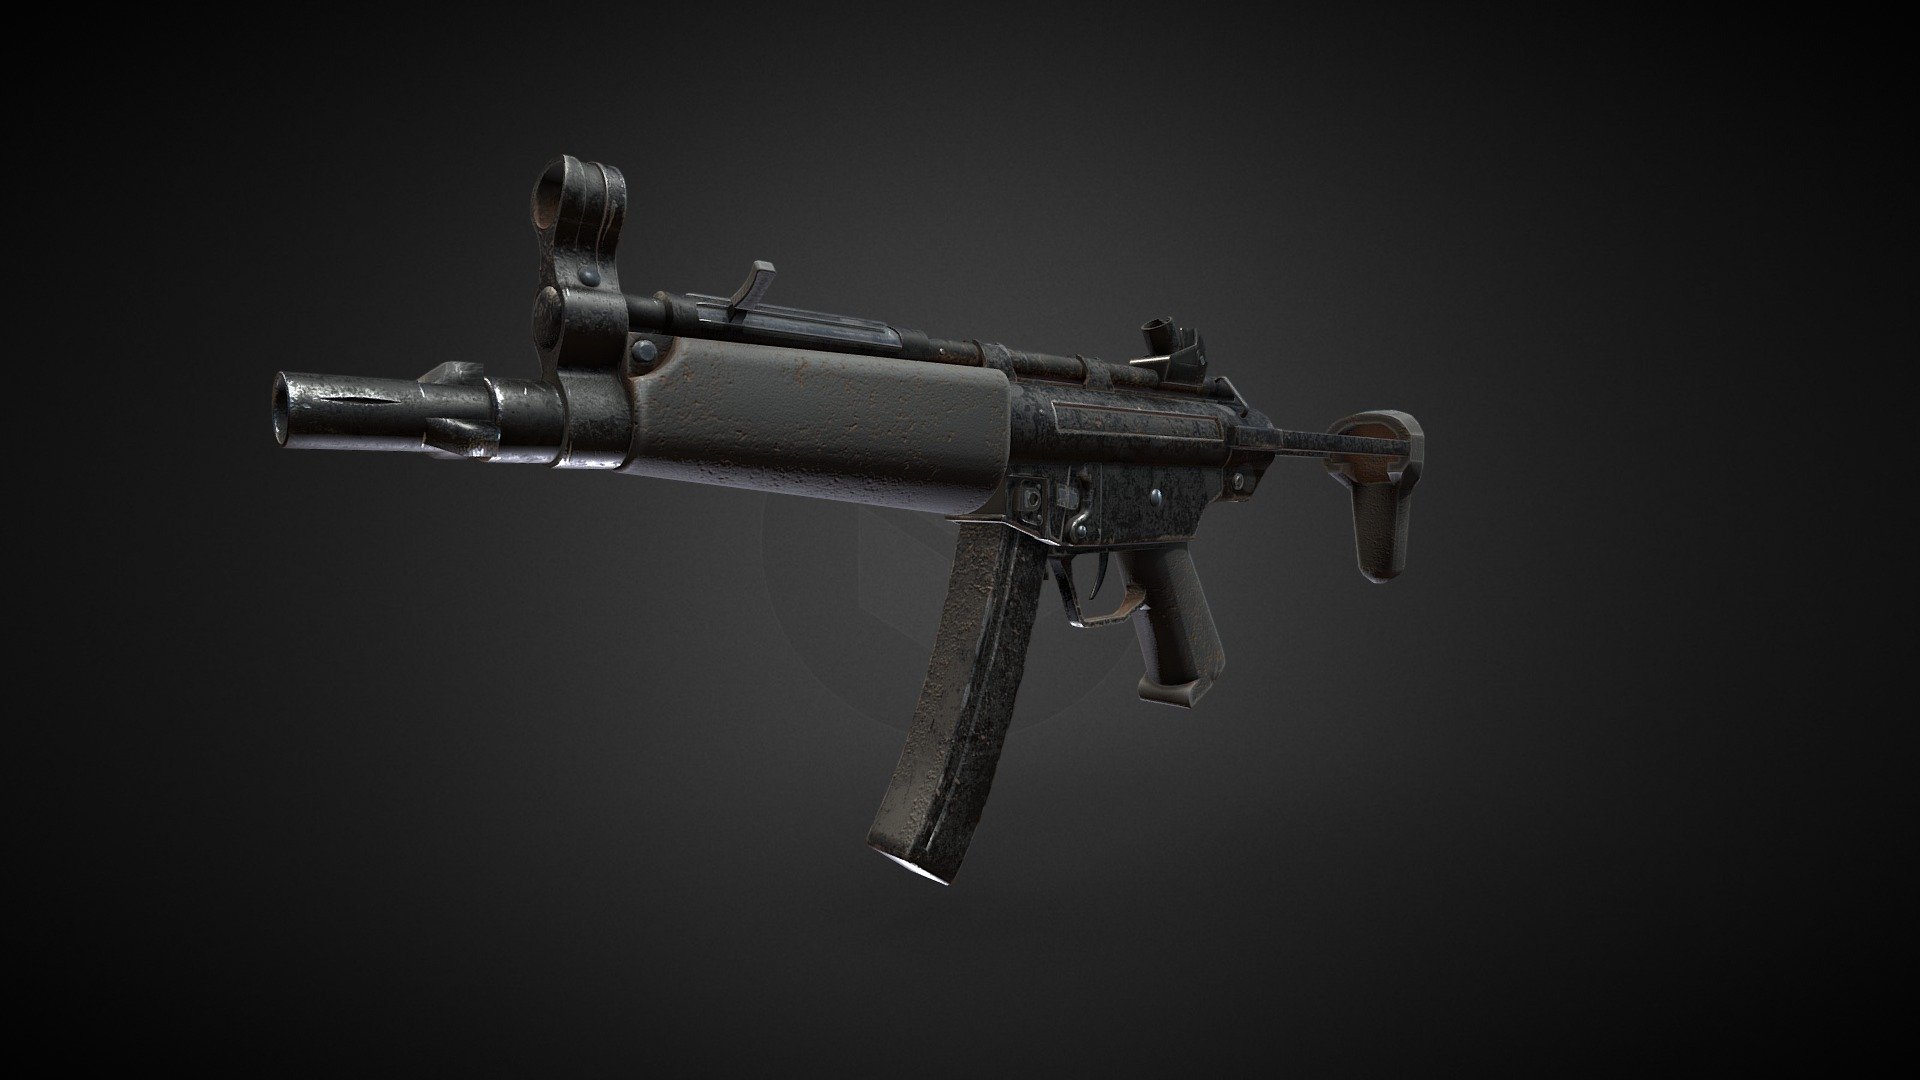 MP5 model i made in 2 days
(and textured too) - MP5 (Free) - Download Free 3D model by Skabl (@skabl_yt) 3d model